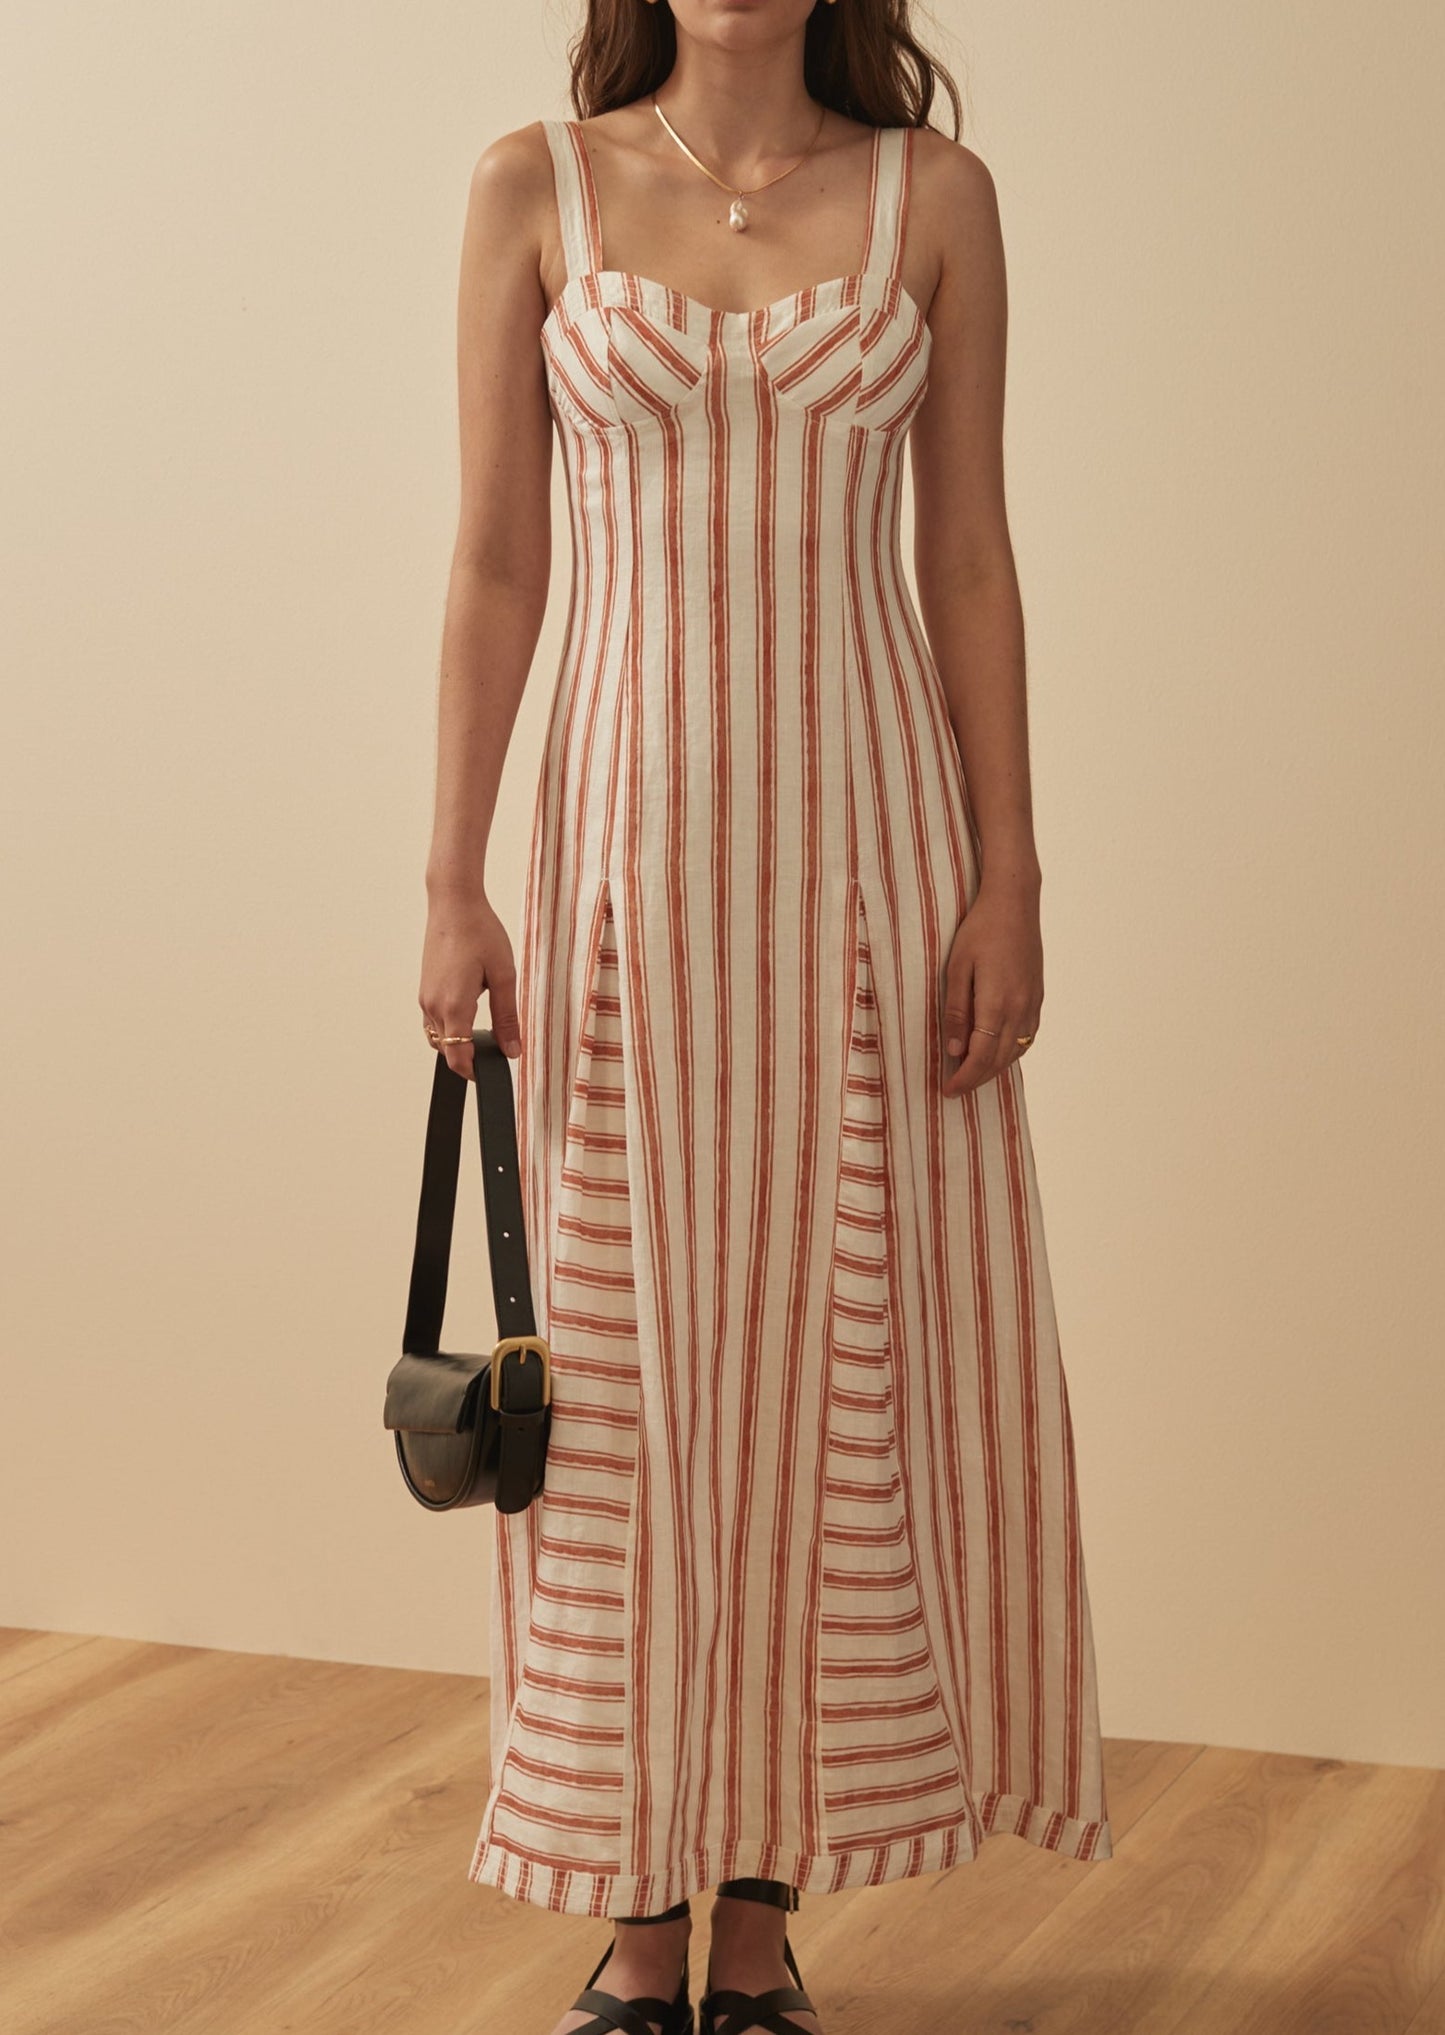 The Dorit Dress - Jeane Stripe